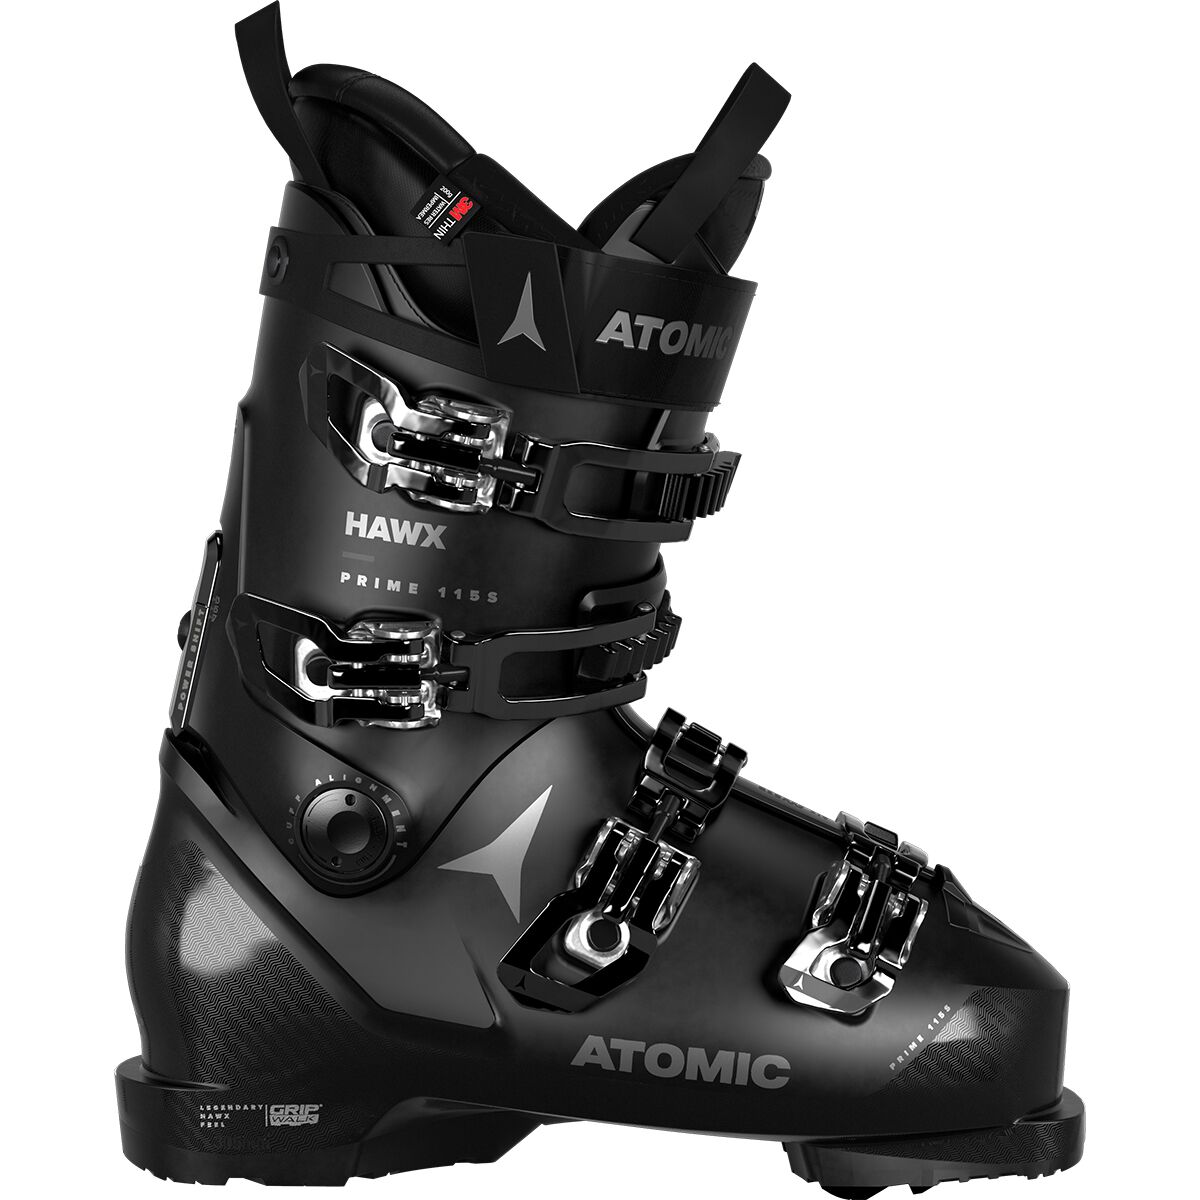 Atomic Hawx Prime 115 S Ski Boot - Women's